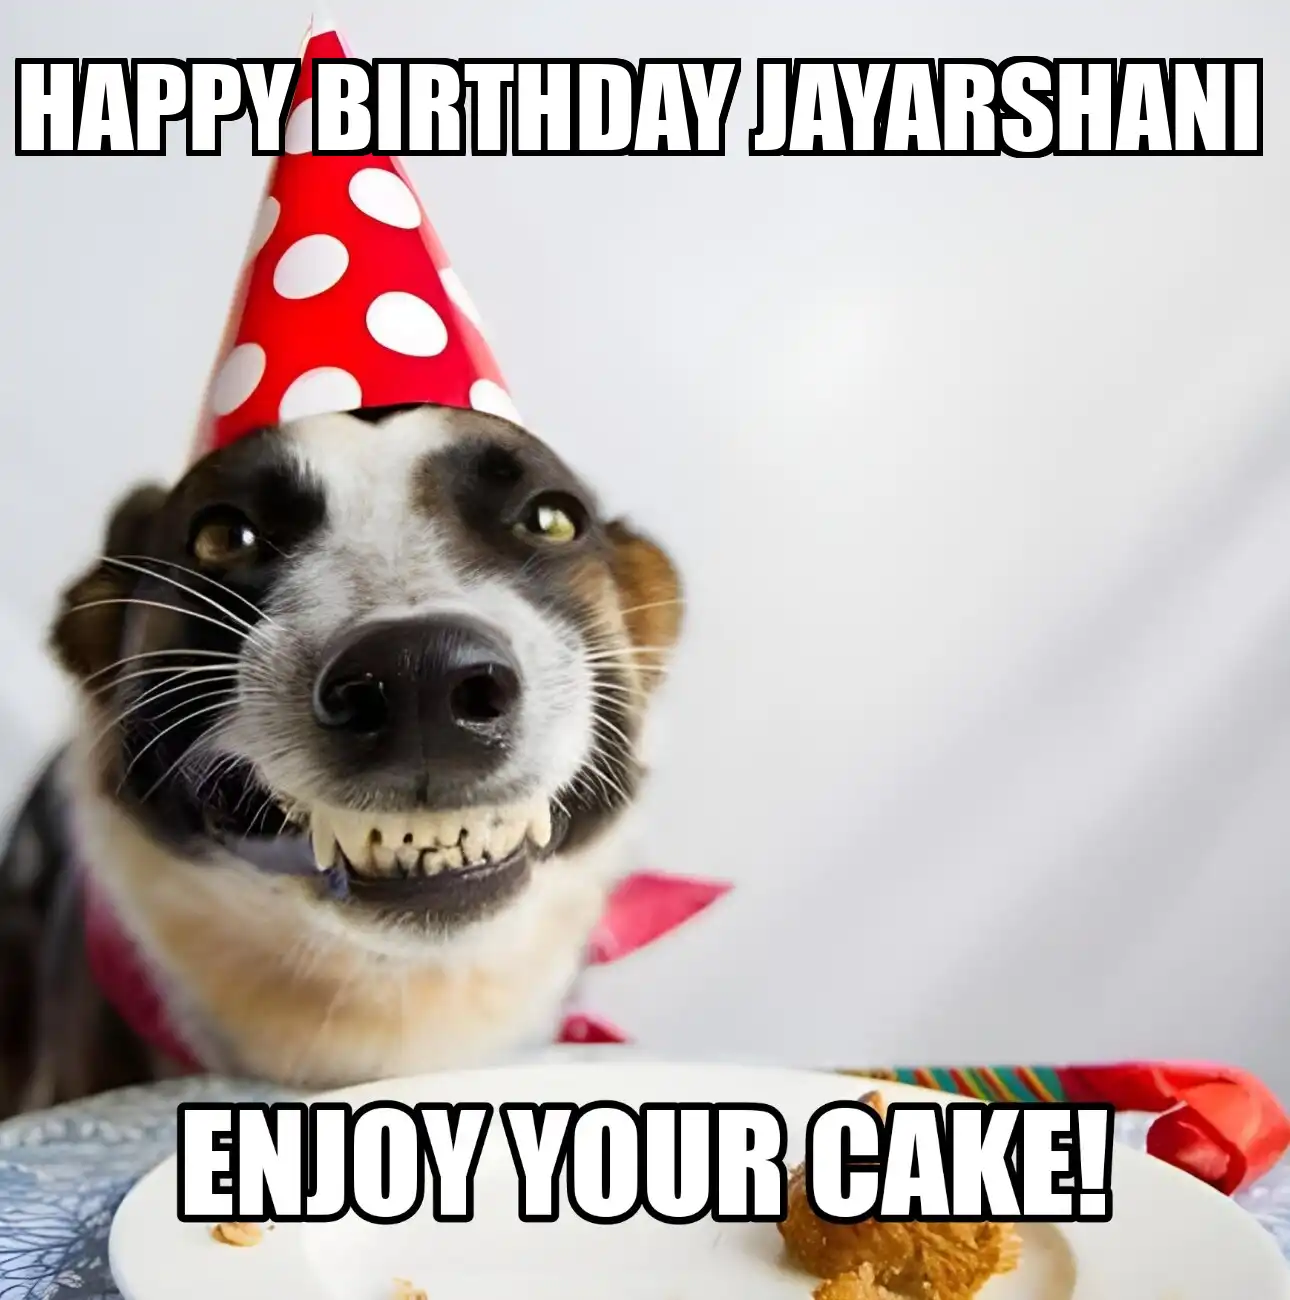 Happy Birthday Jayarshani Enjoy Your Cake Dog Meme